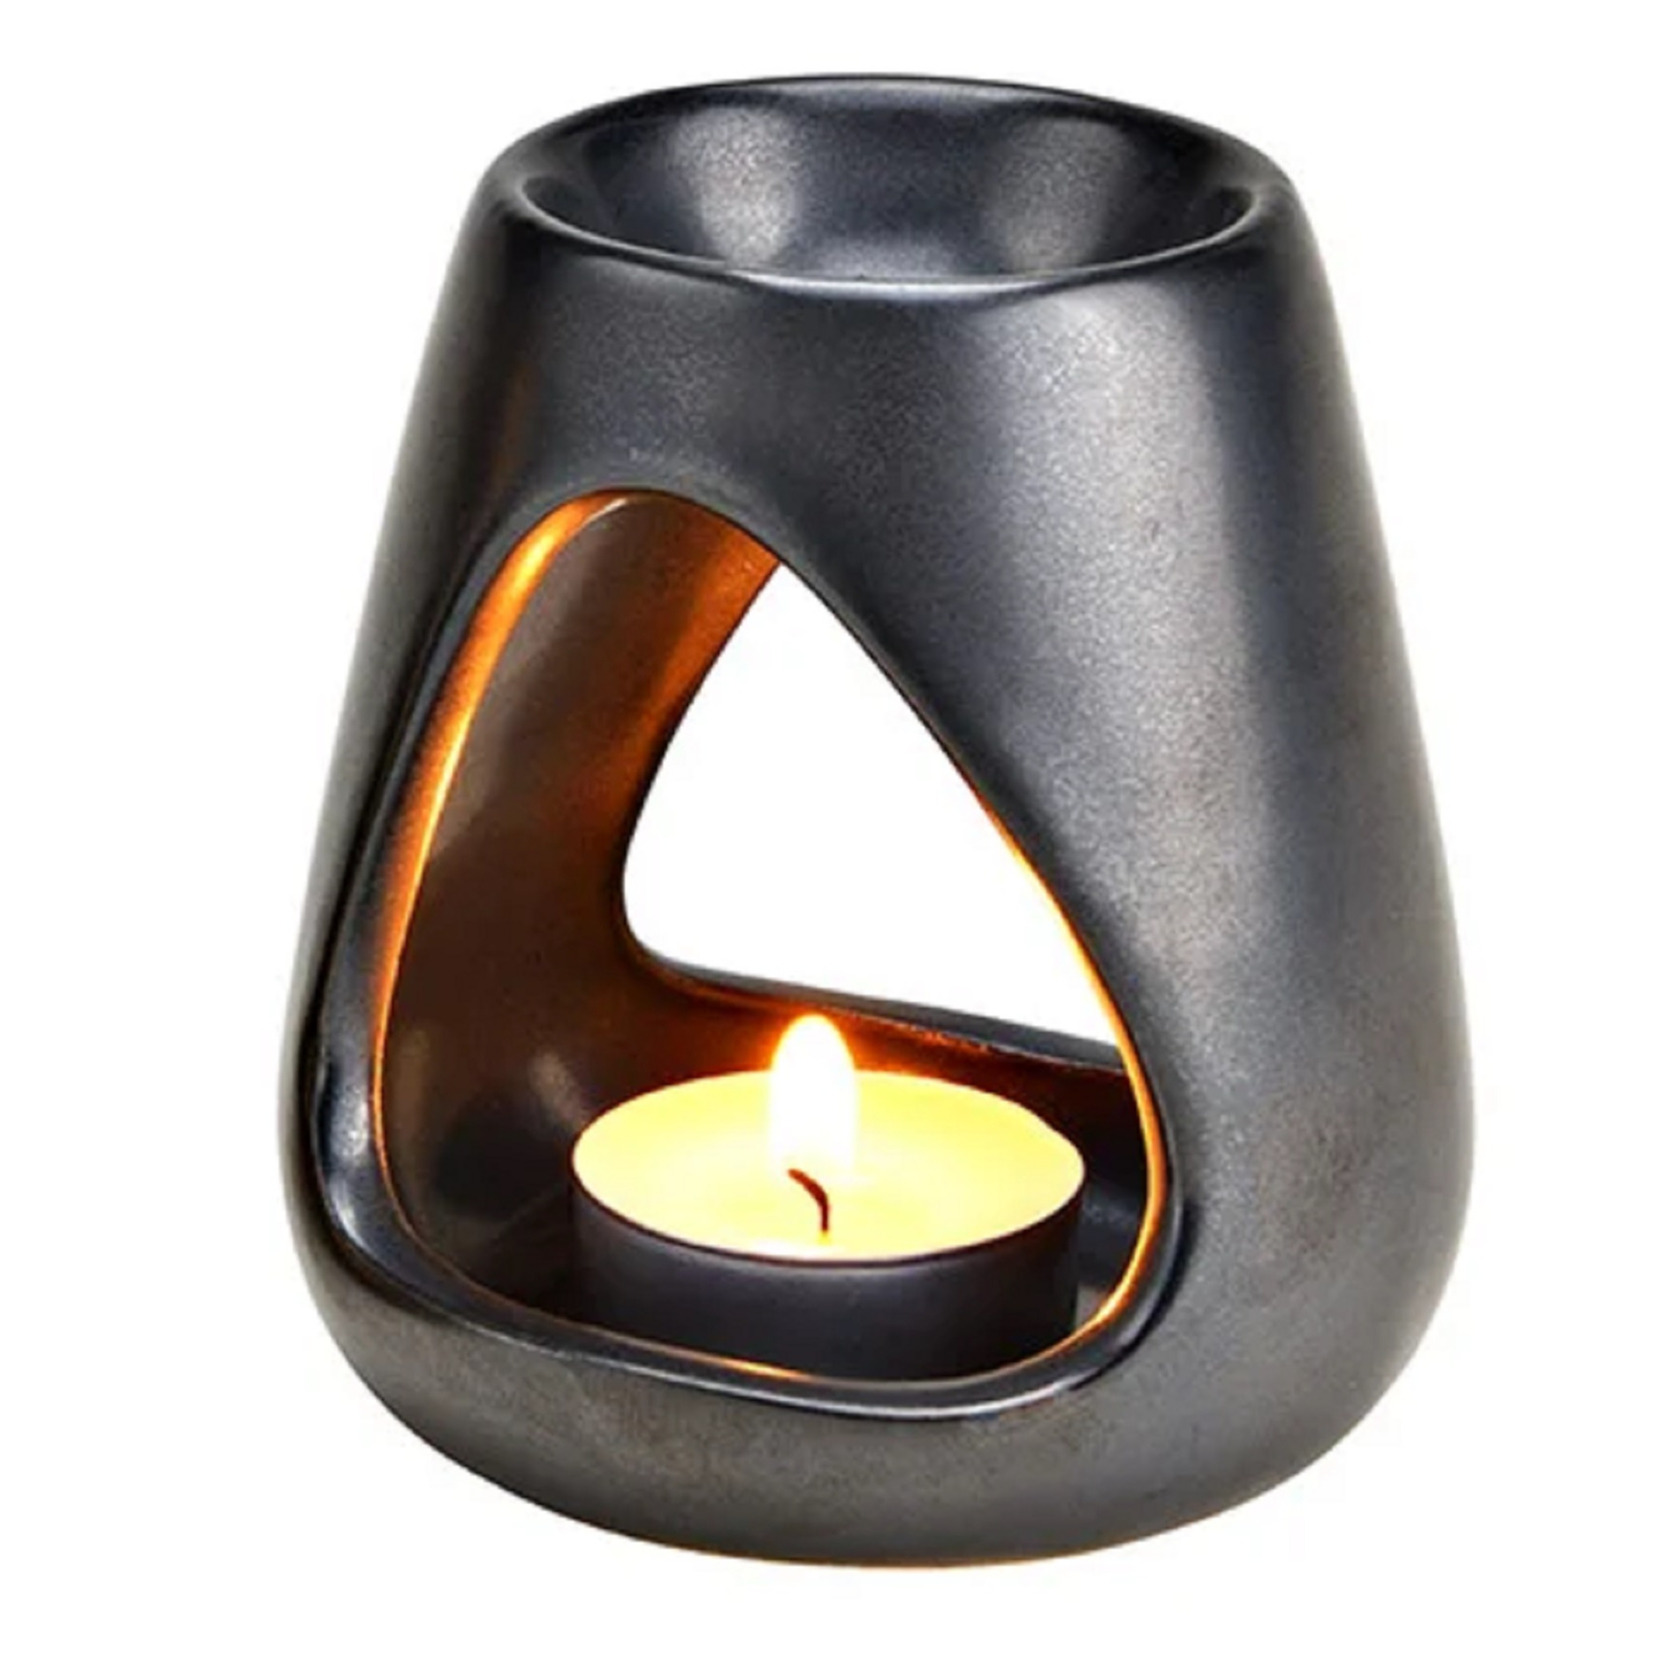 Geurbrander voor amberblokjes-geurolie keramiek zilver 9 x 10 x 9 cm